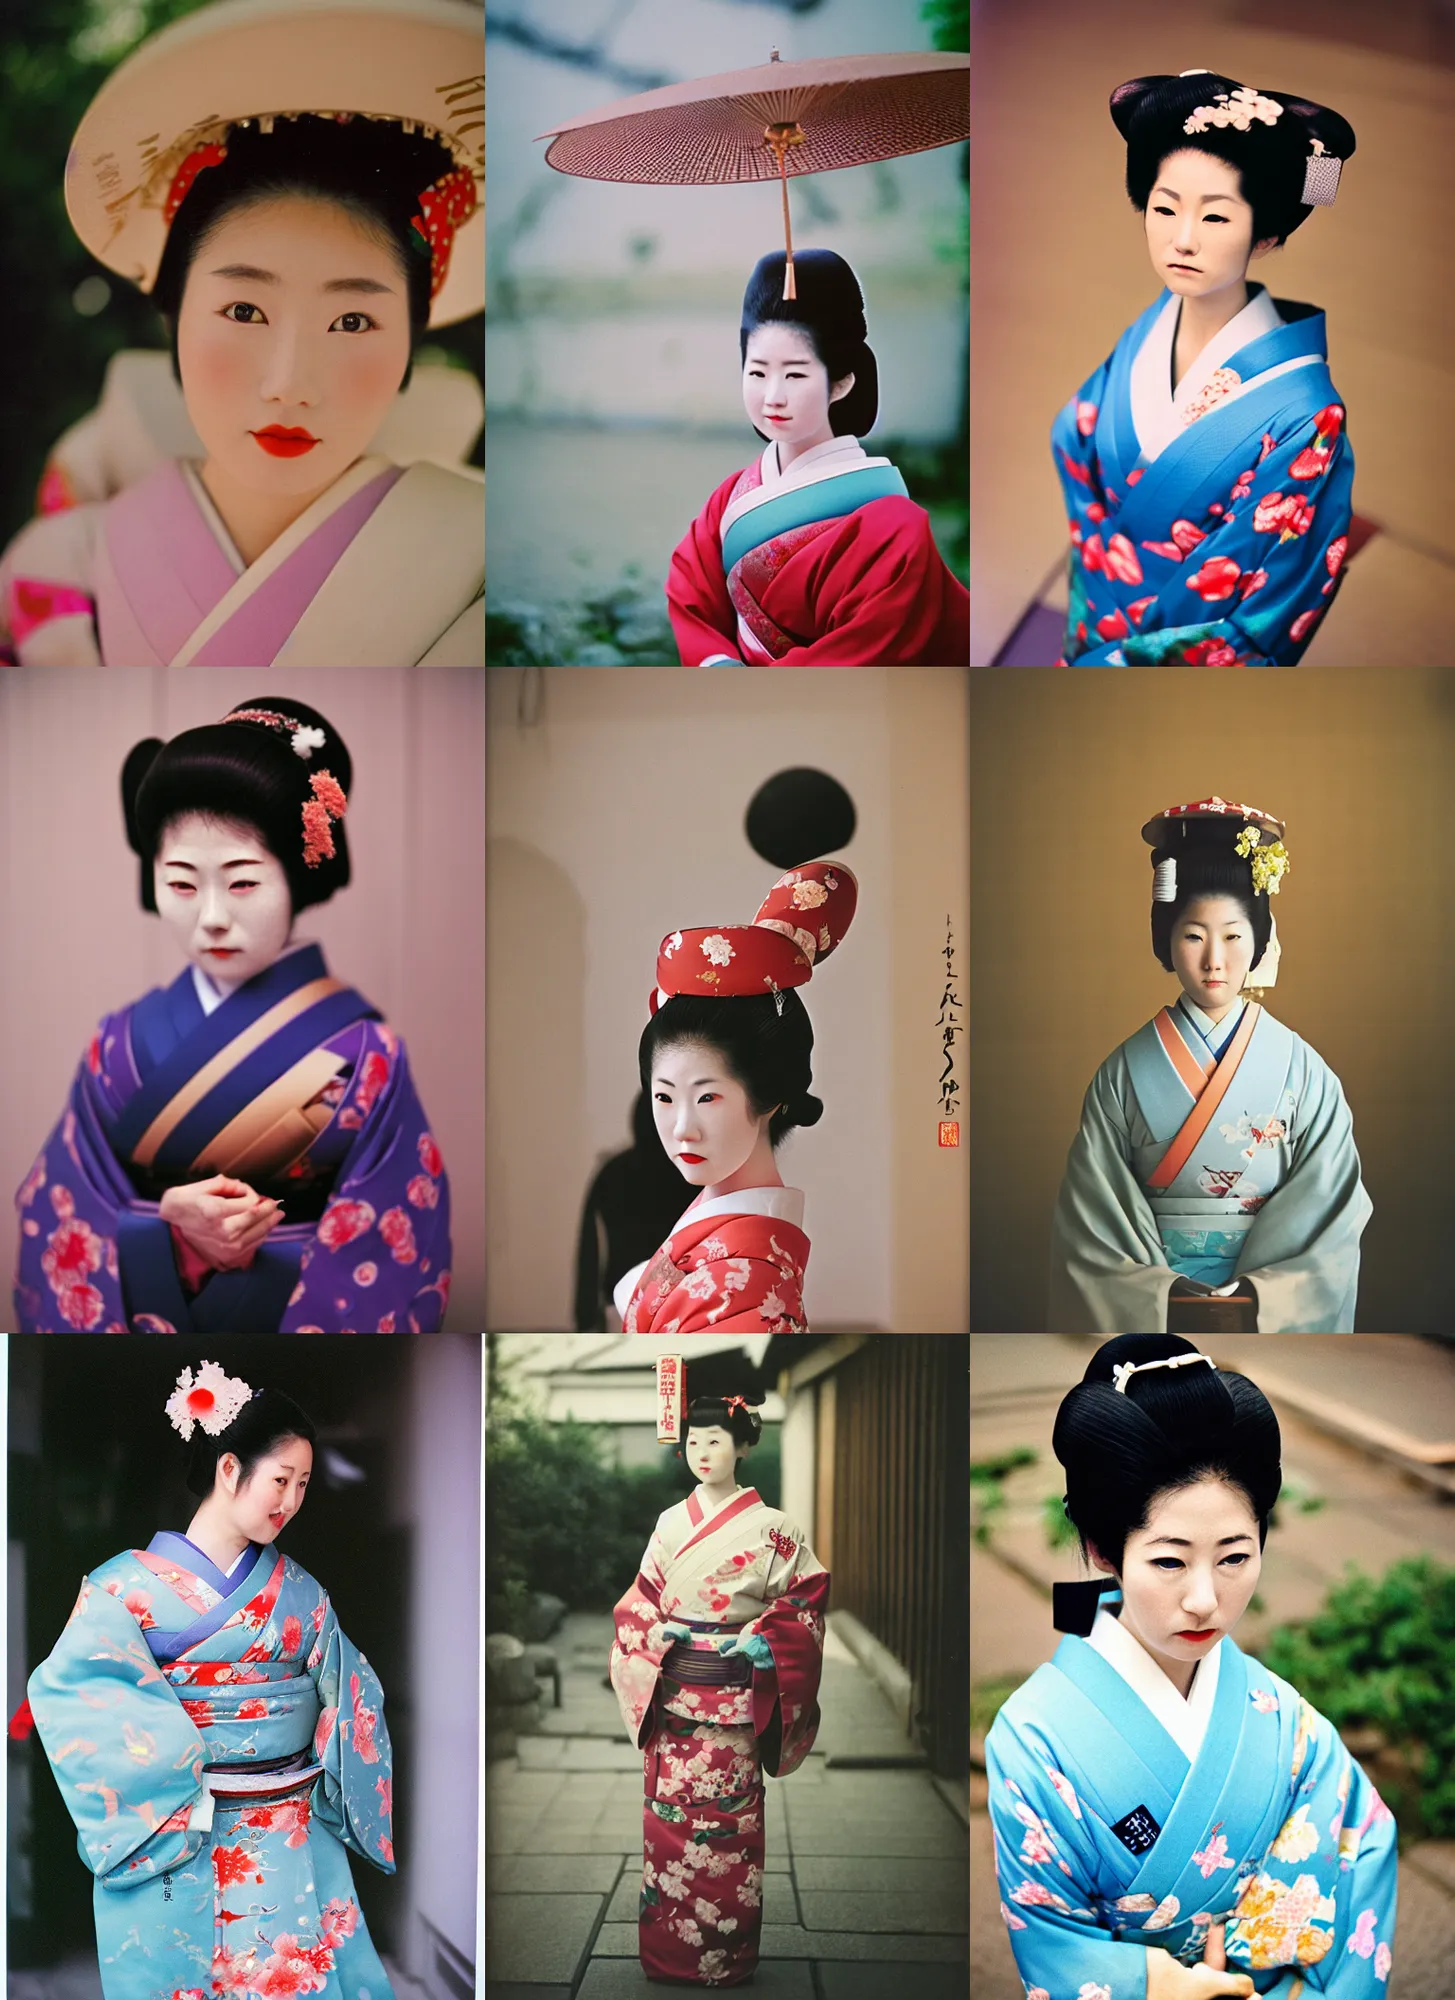 Prompt: Portrait Photograph of a Japanese Geisha Fujifilm Fujichrome T64